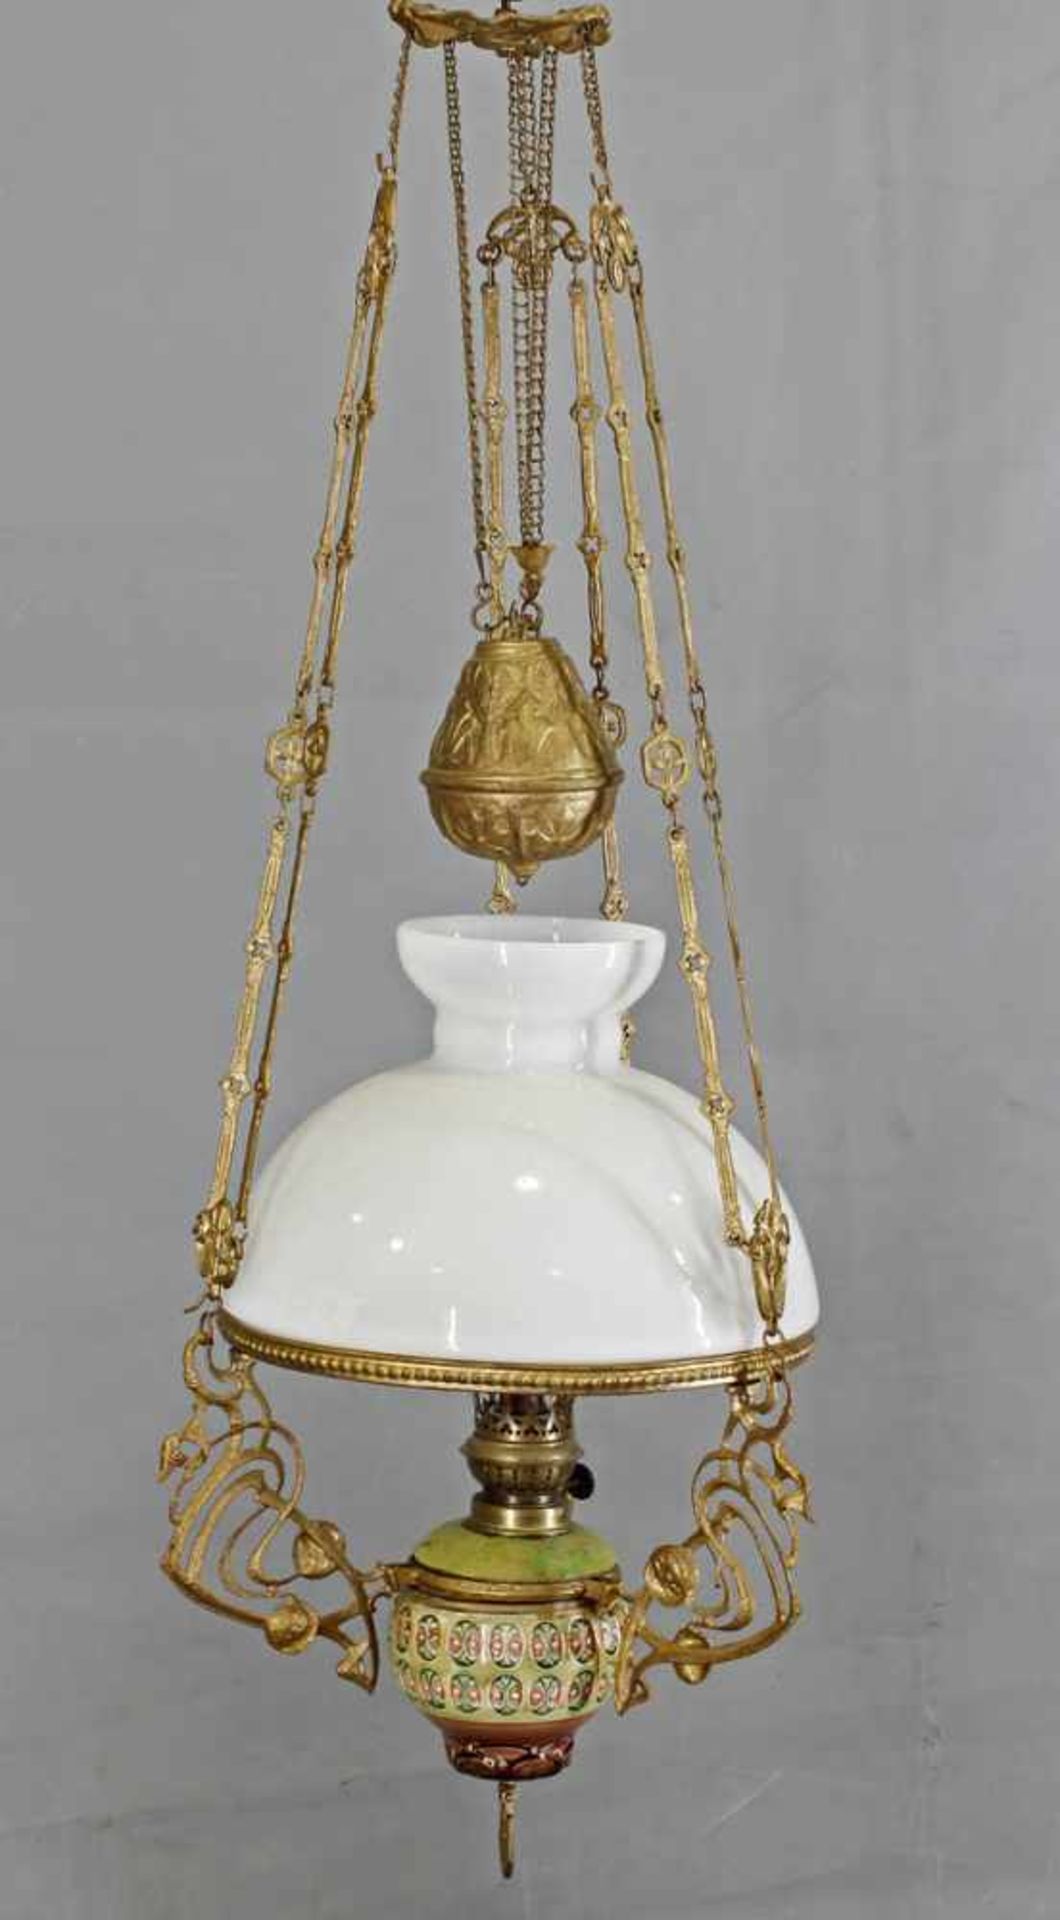 Petroleum- Deckenlampe Jugendstil.um 1900, goldfarben gefasstes Metallgestell mit Majolika-